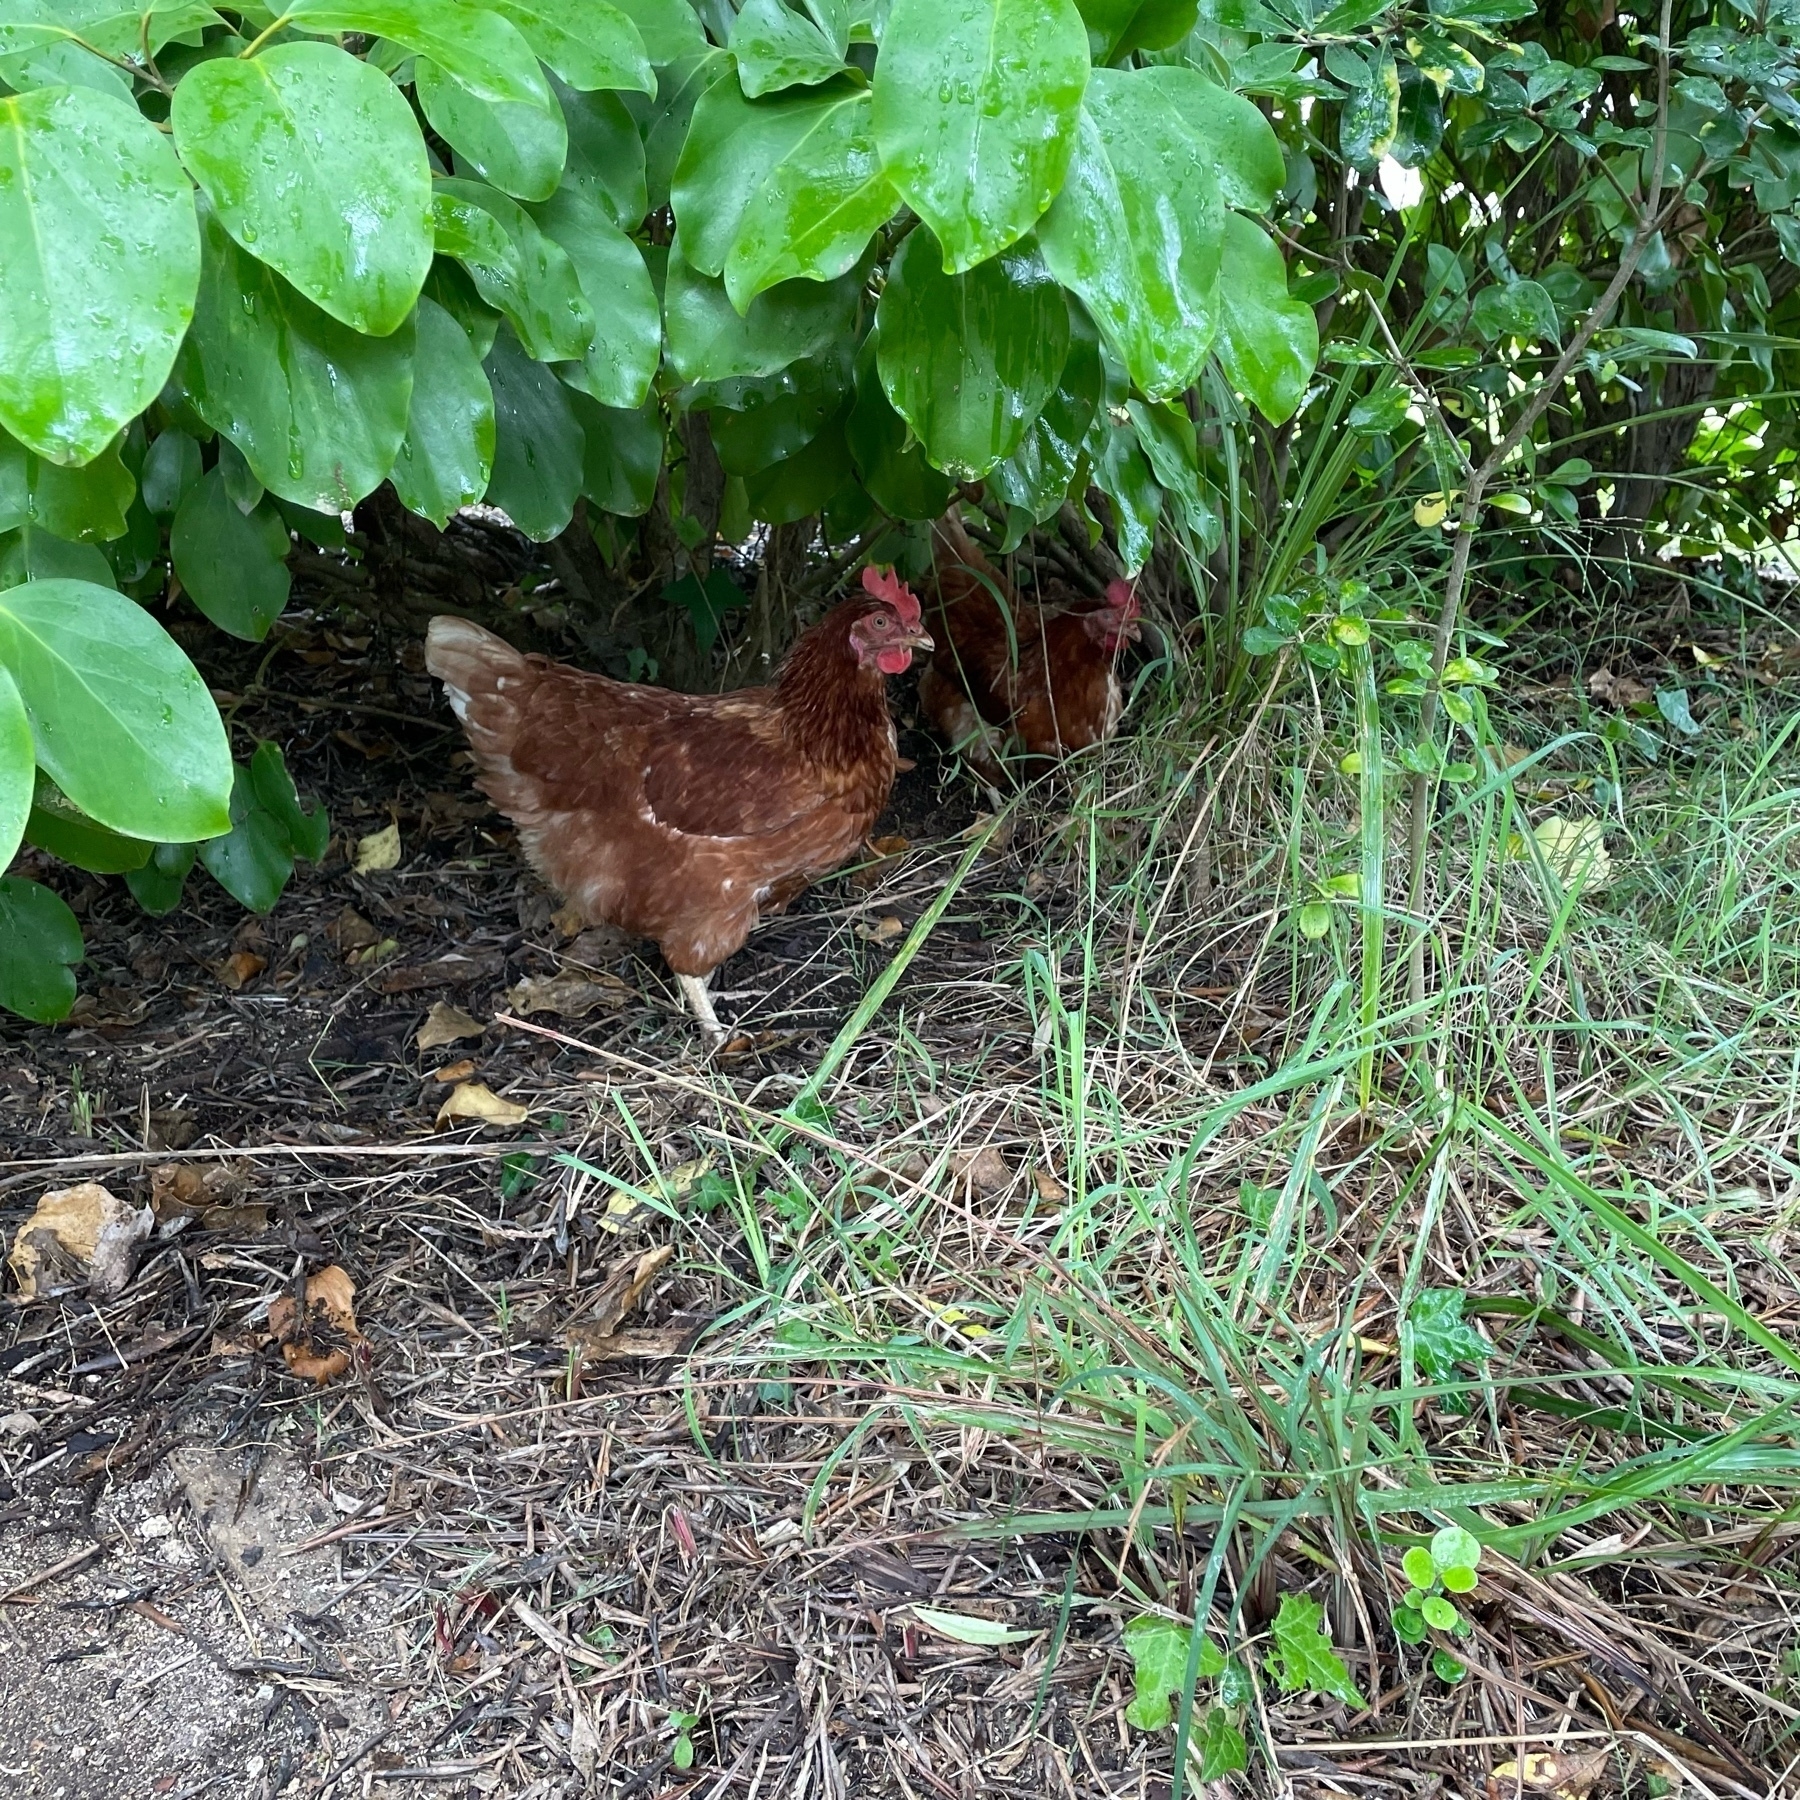 Two chickens enjoying foraging under lush vegetation.